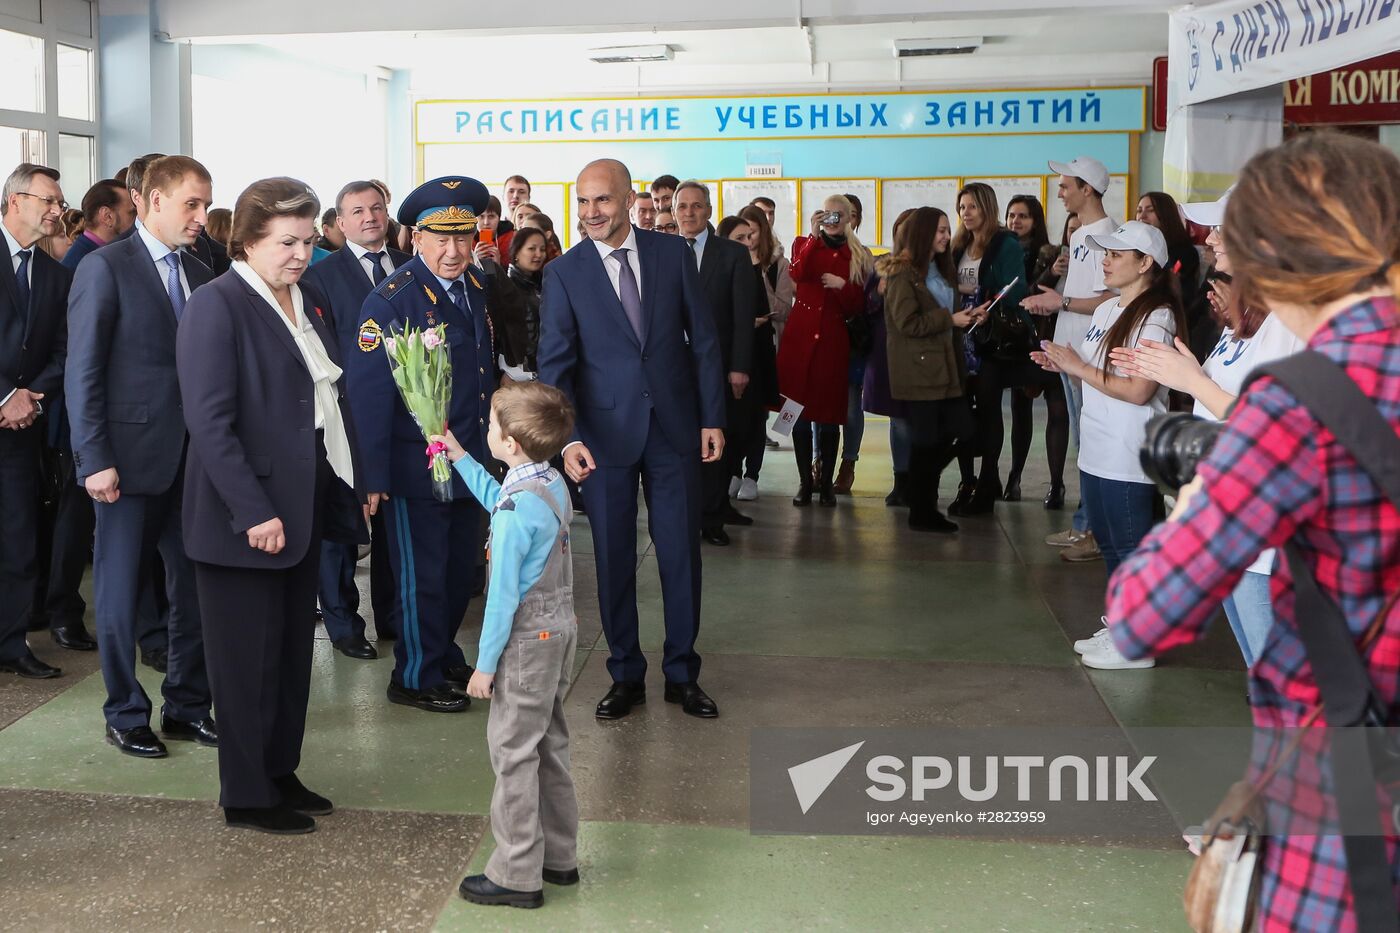 Valentina Tereshkova and Alexei Leonov's meeting with school and university students in Blagoveshchensk